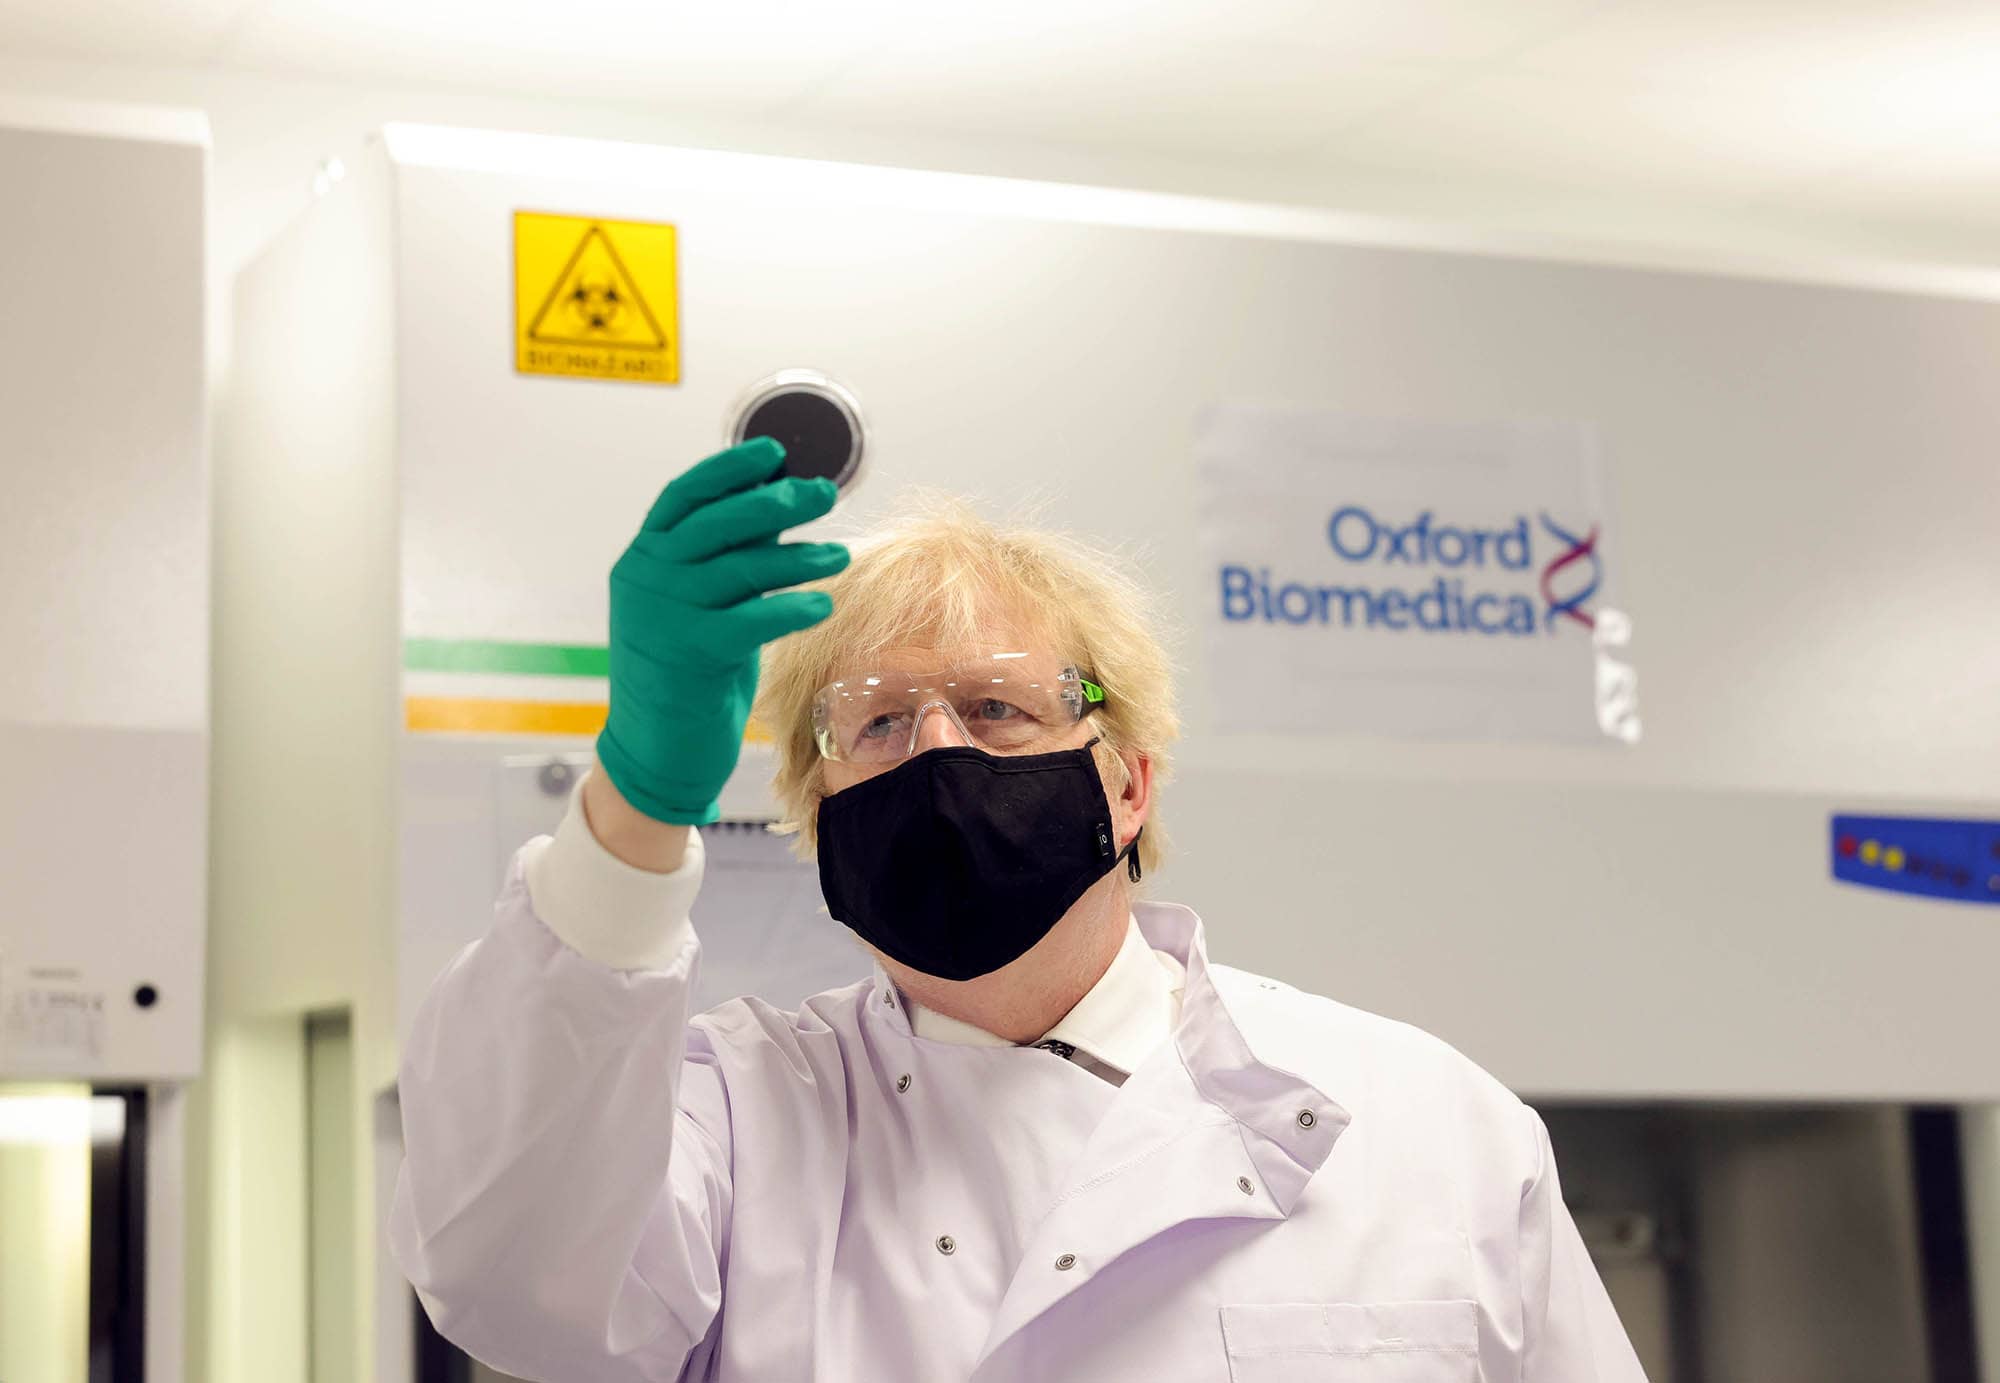 Johnson visits Oxford Biomedica